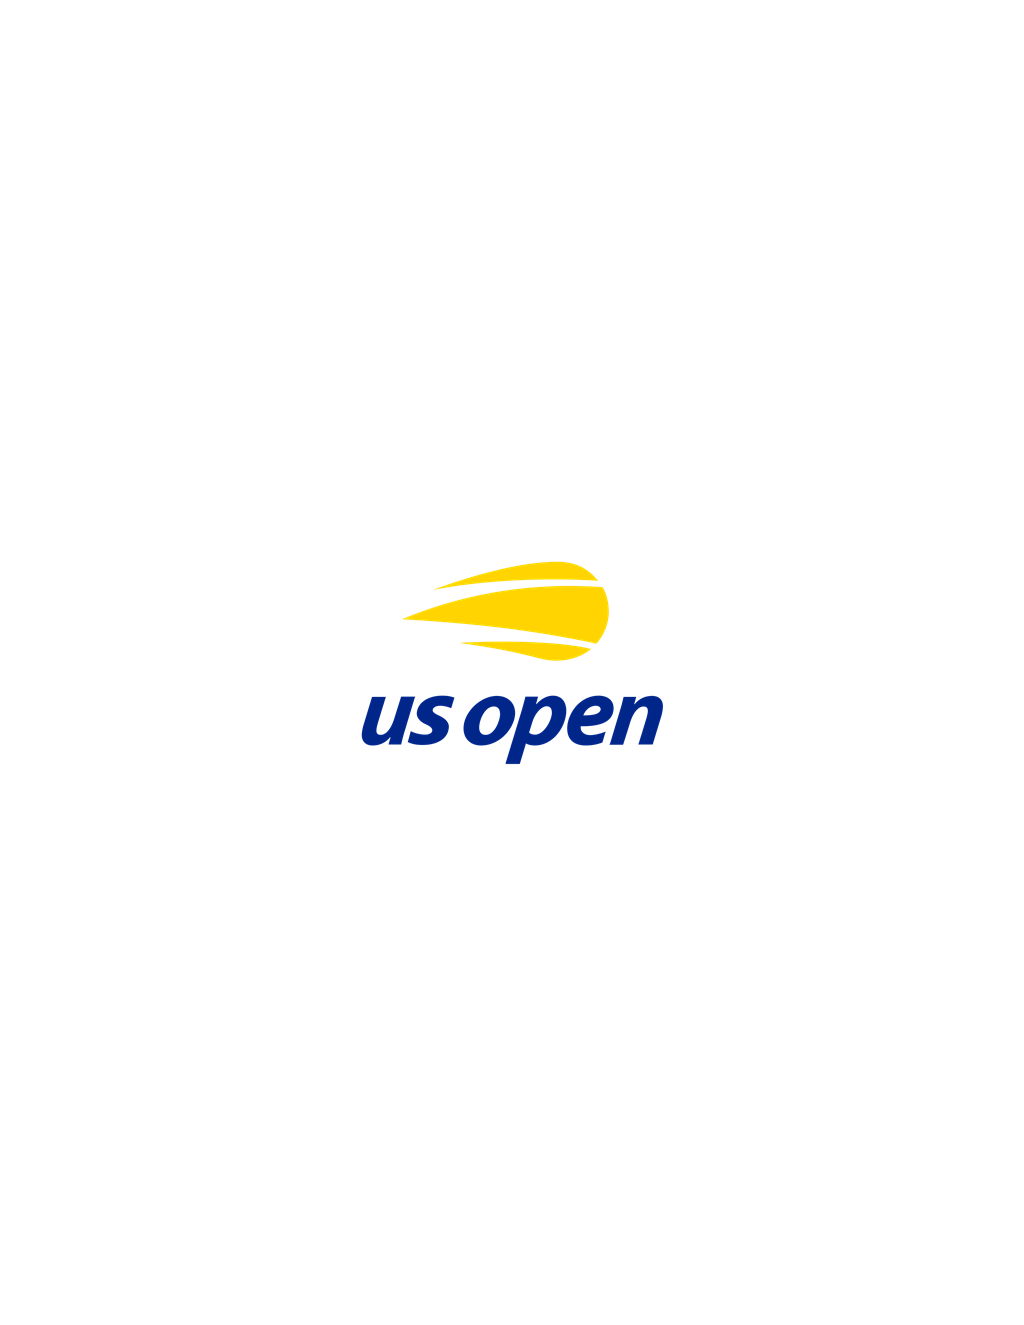 US Open logotype, transparent .png, medium, large